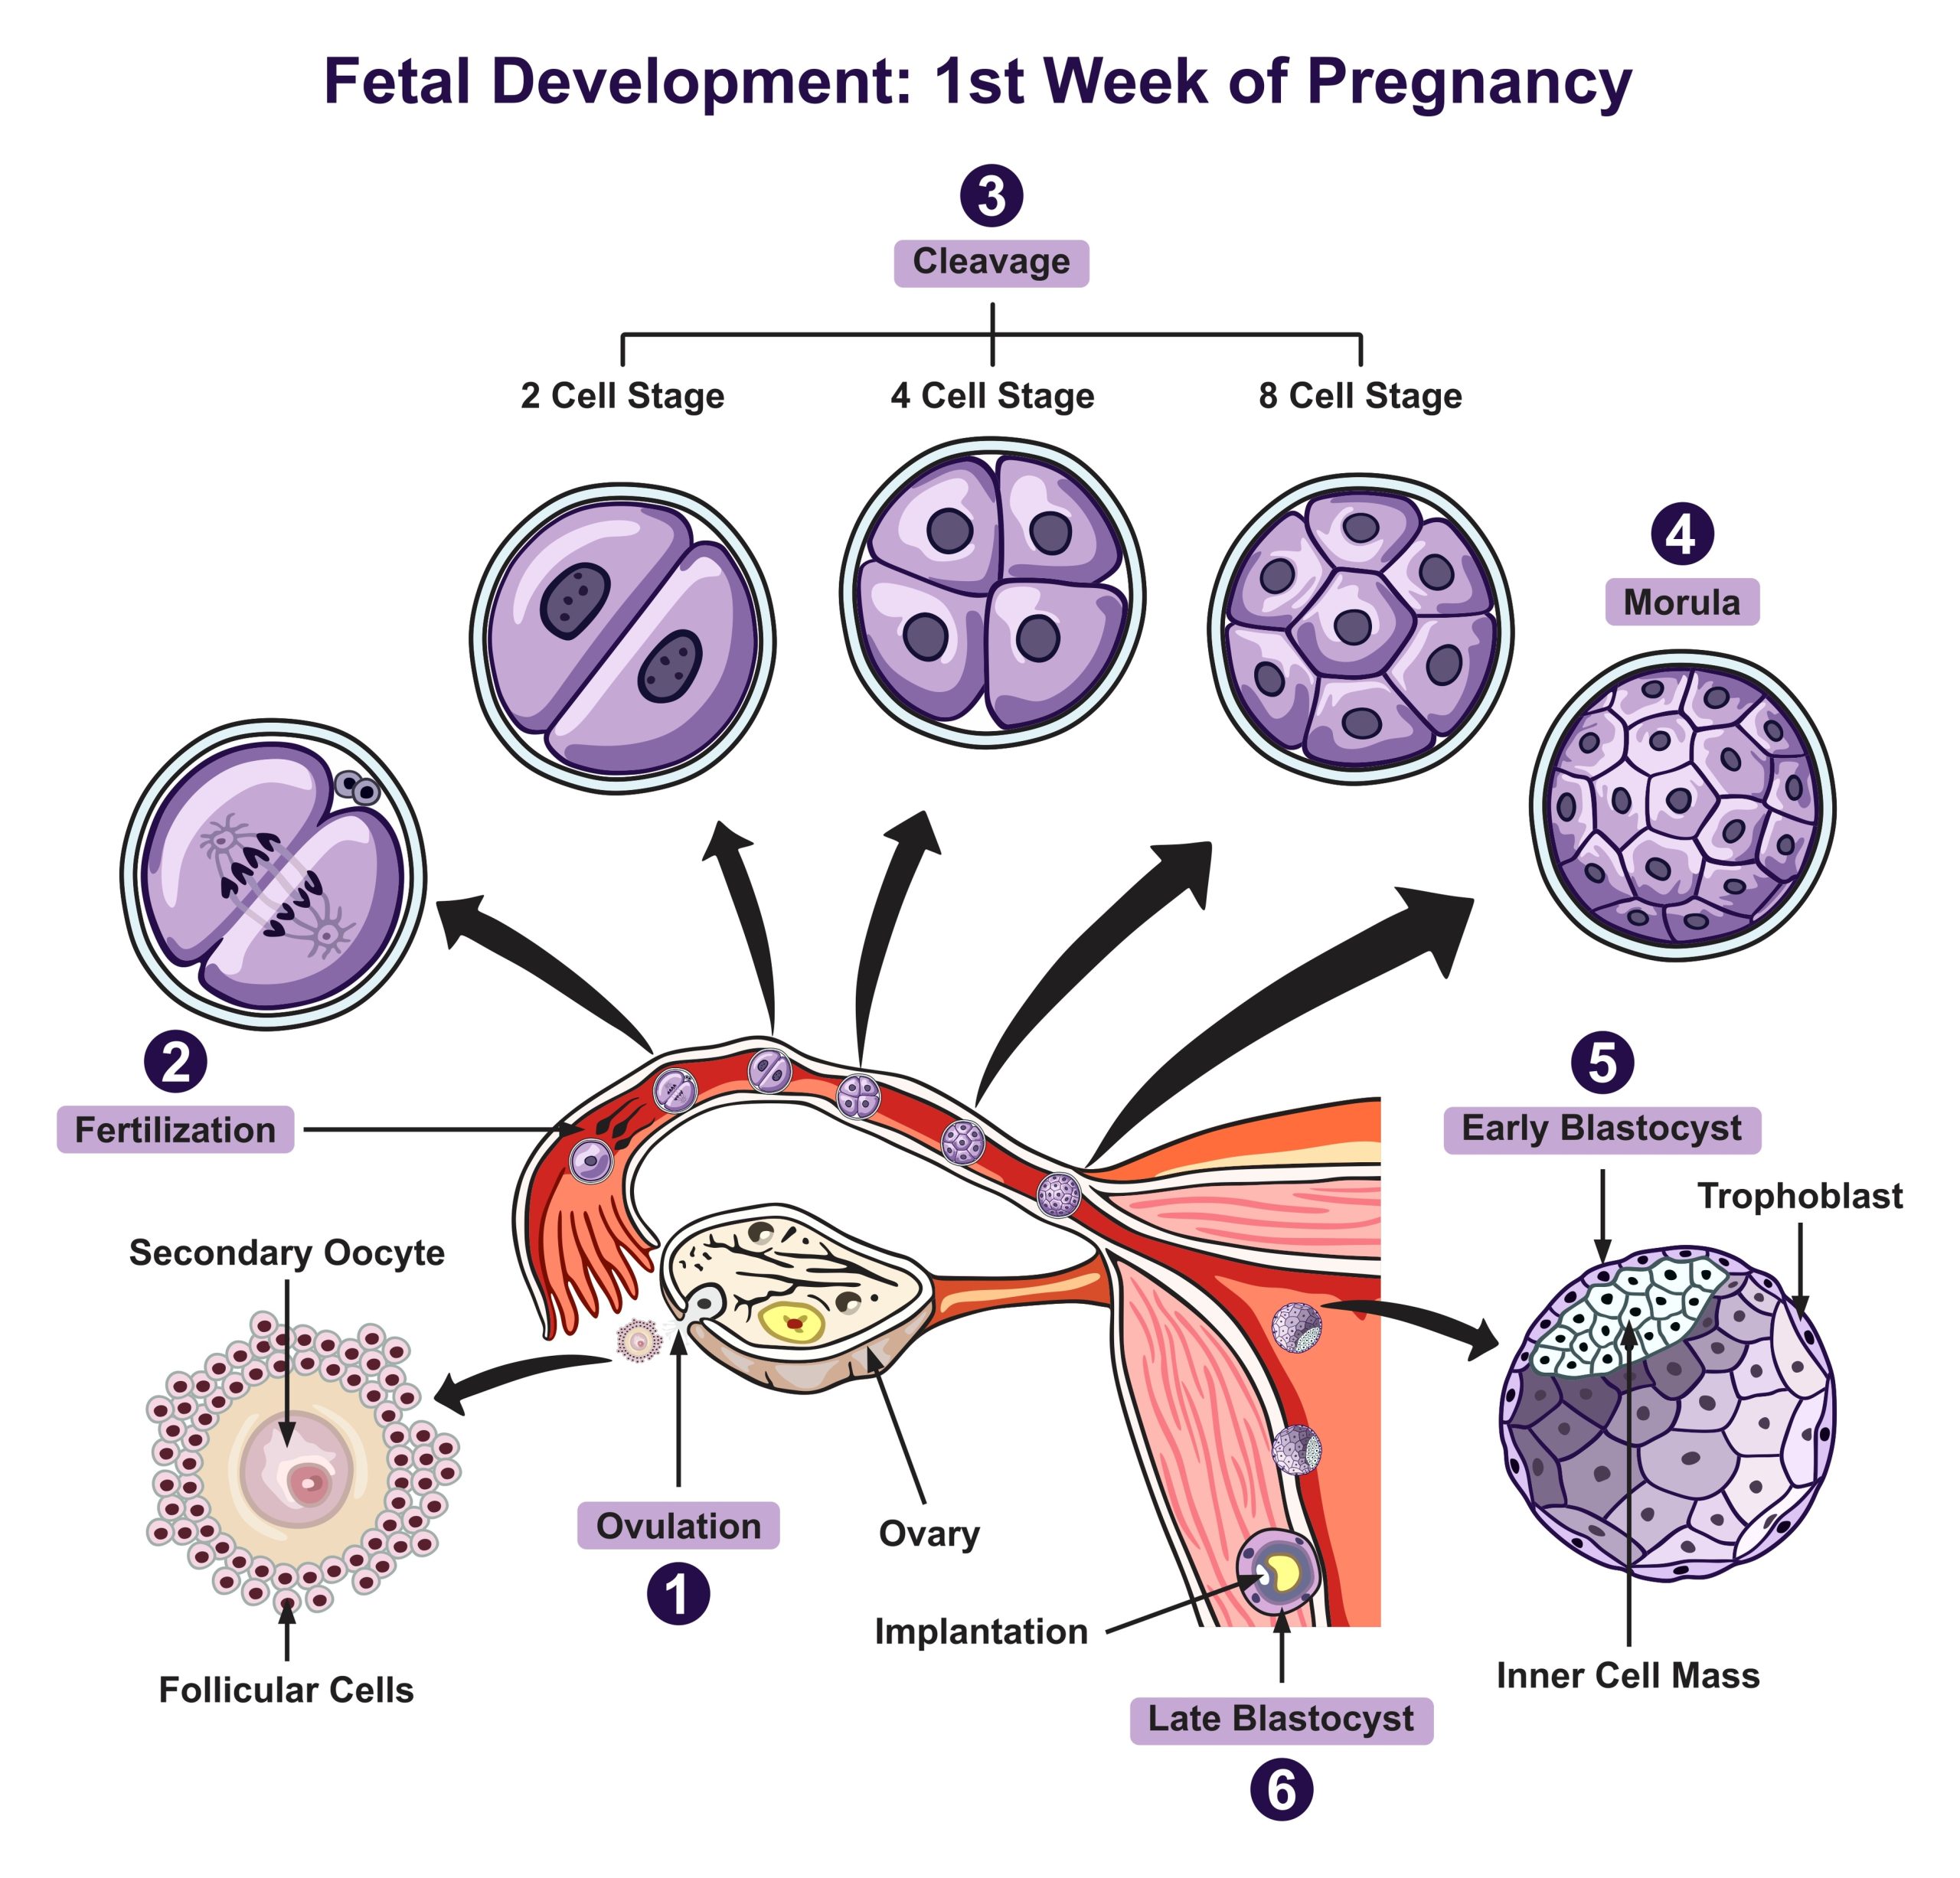 Fetal development first week of pregnancy: ovulation, fertilization, cleavage, and blastocysts.